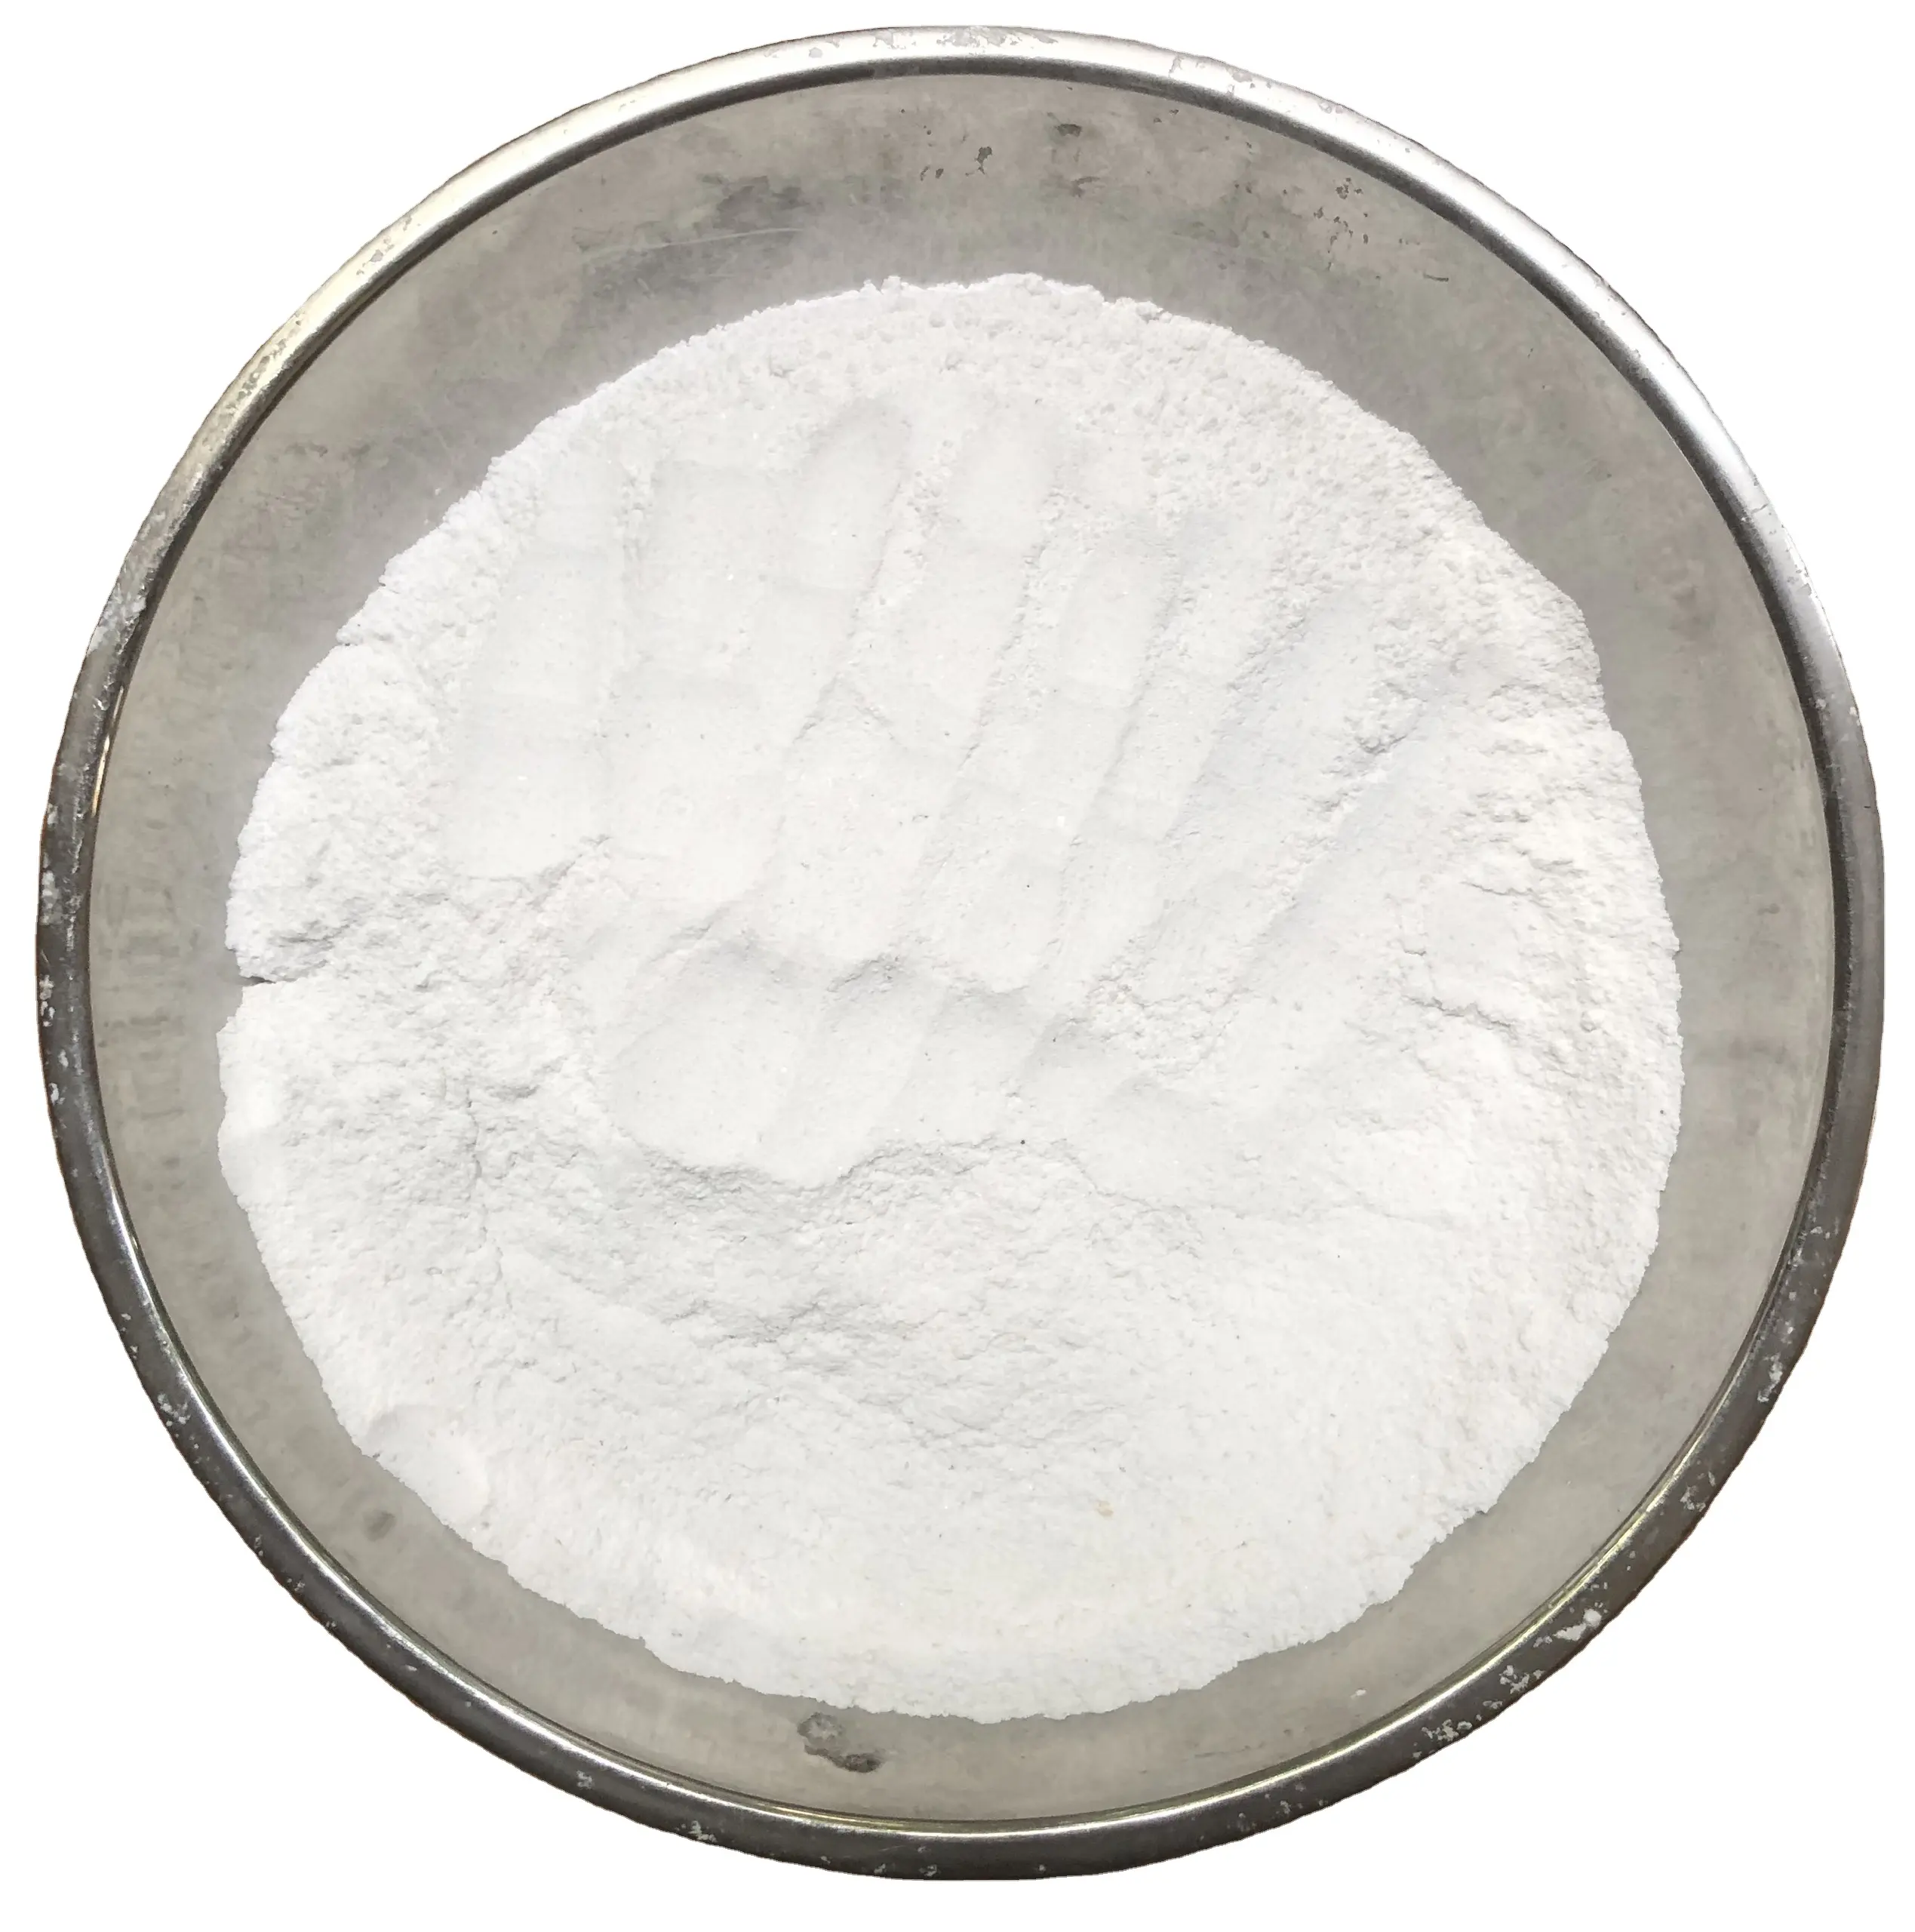 Bubuk kalsium karbonat tingkat industri CaCo3 Vietnam ekspor pesanan jumlah besar putih